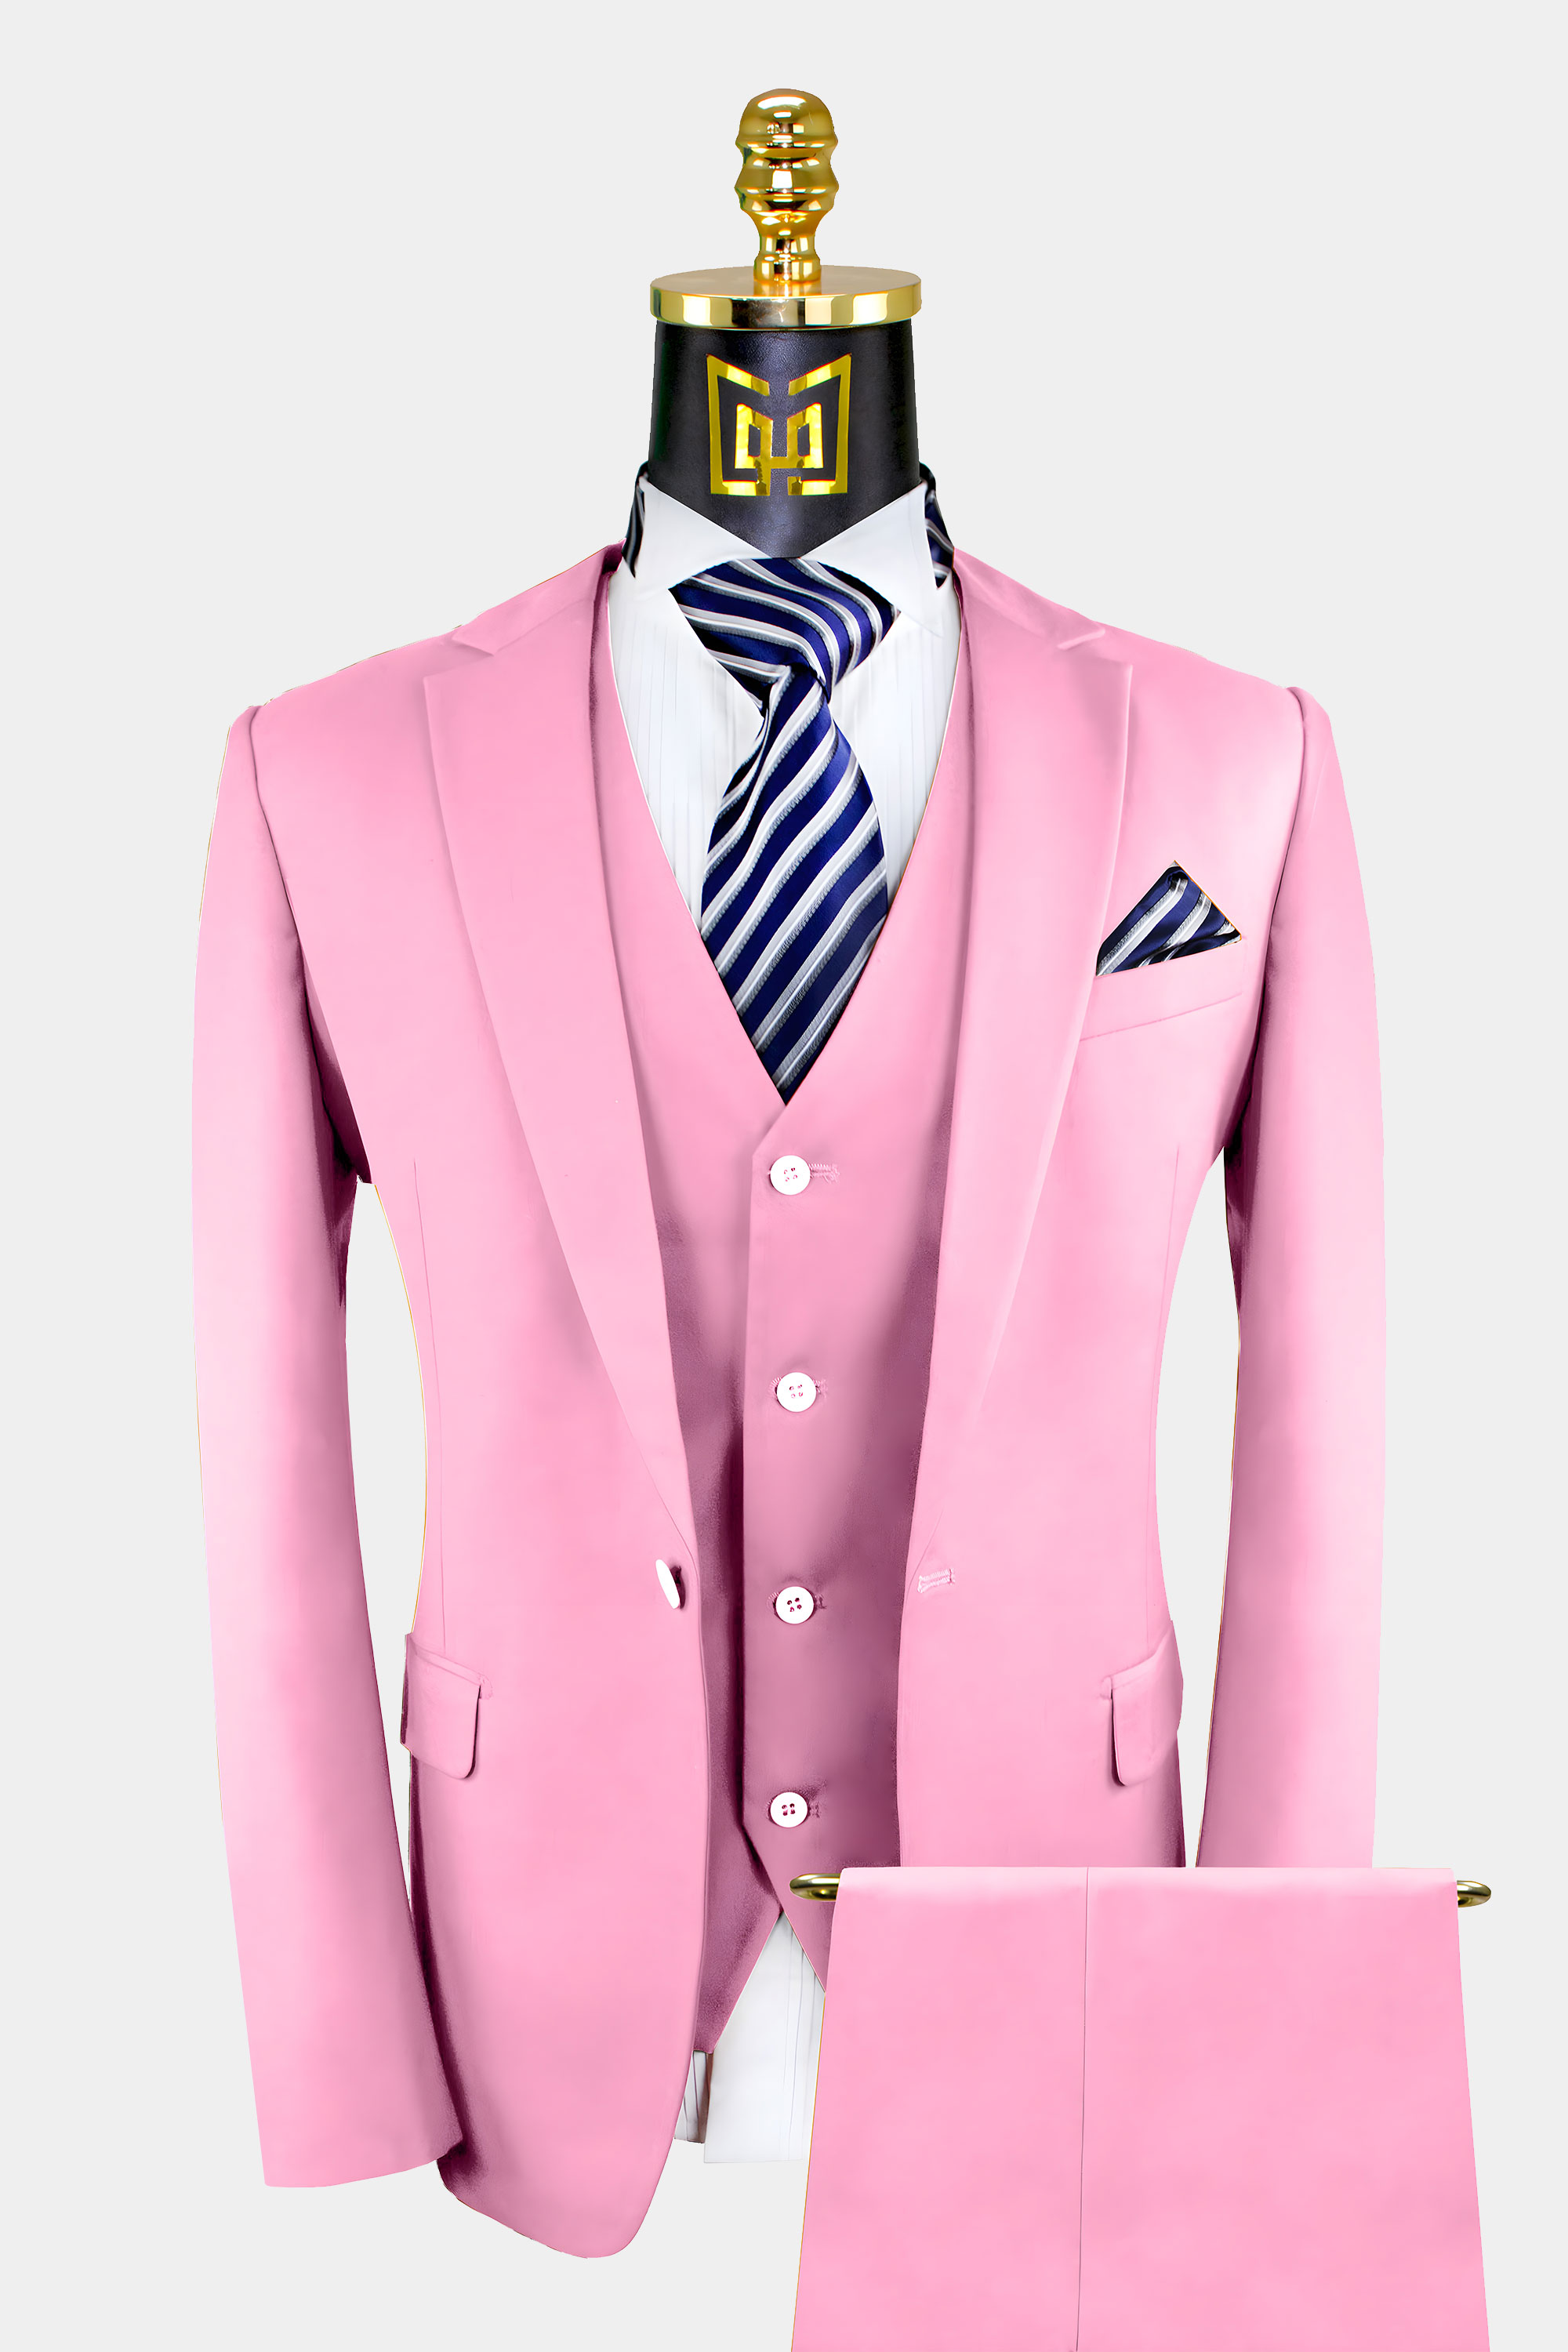 Pink Suit For Wedding | vlr.eng.br